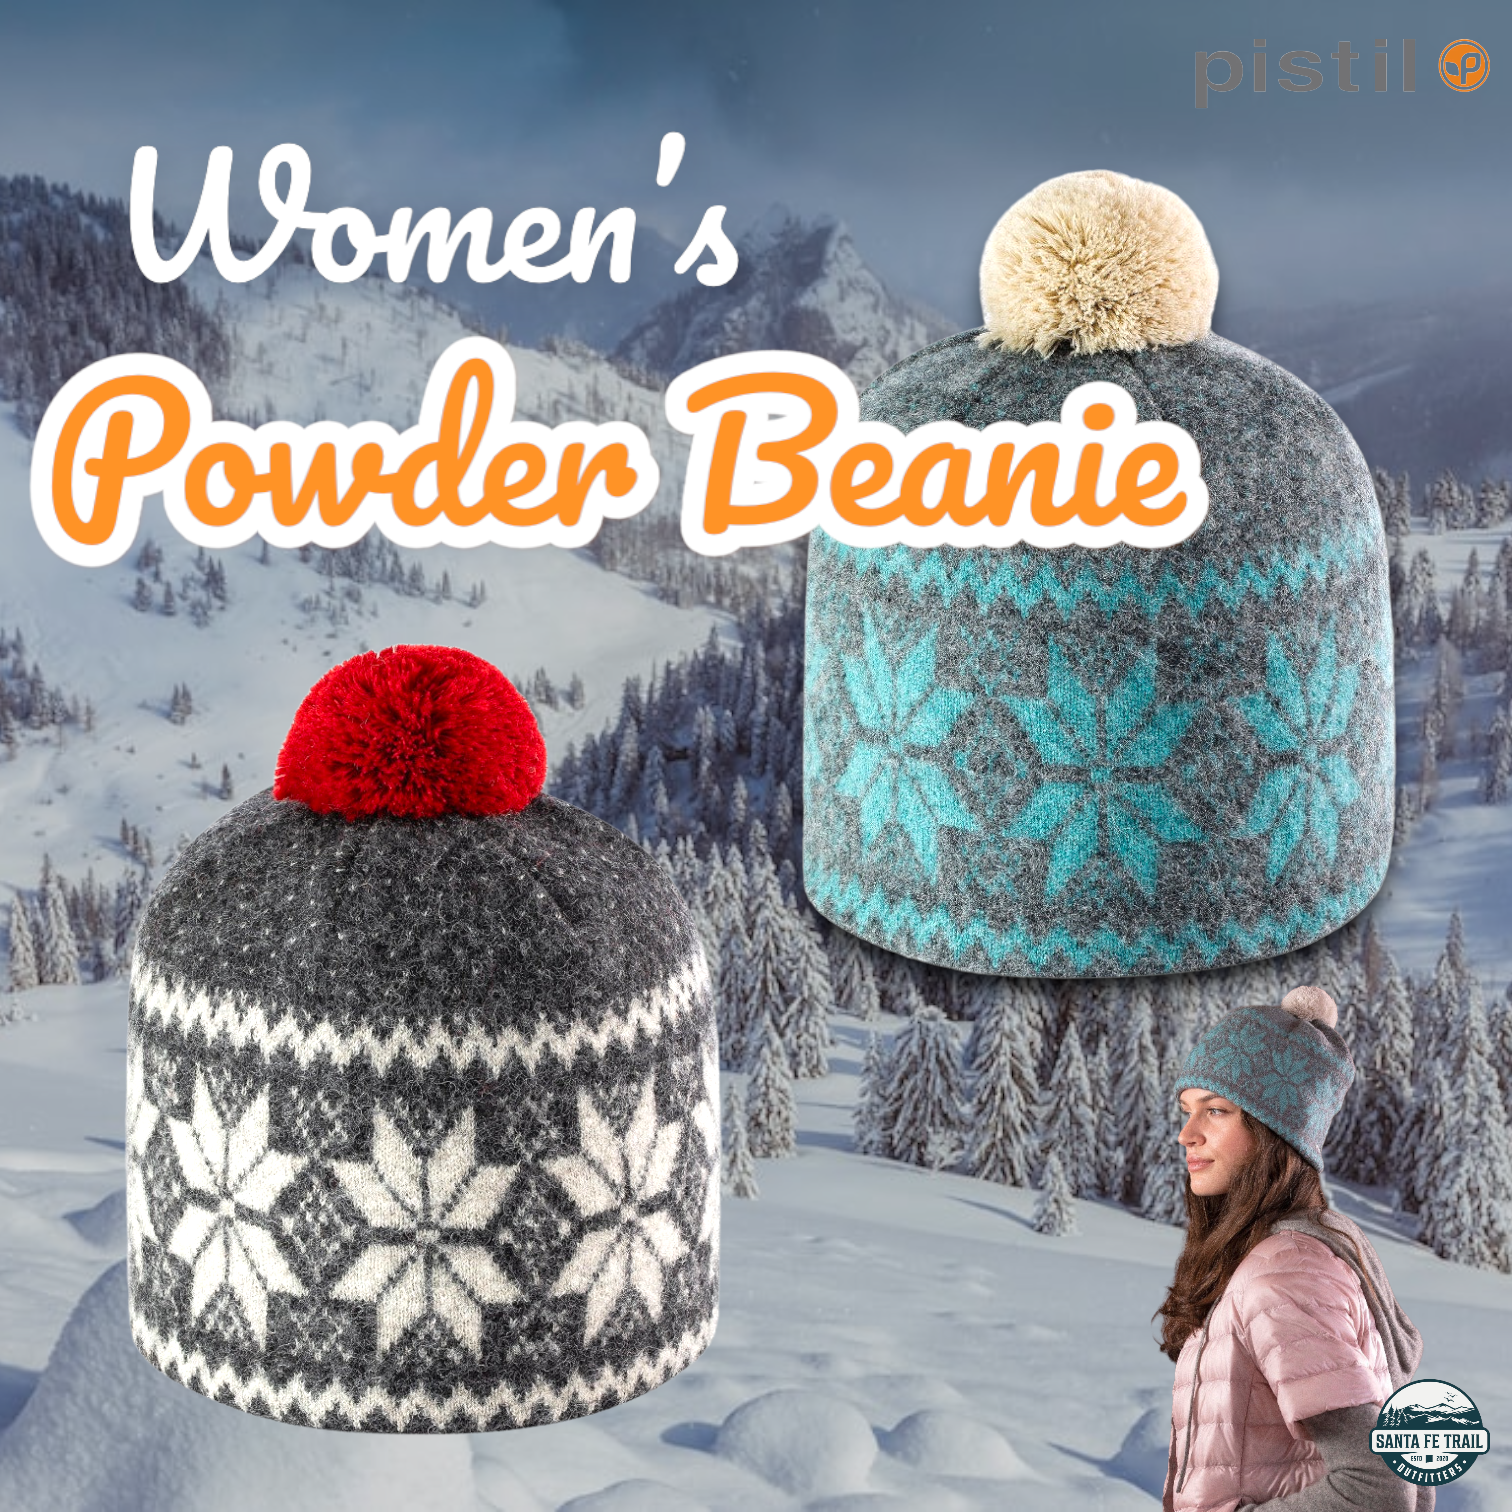 Powder Beanie by Pistil Designs